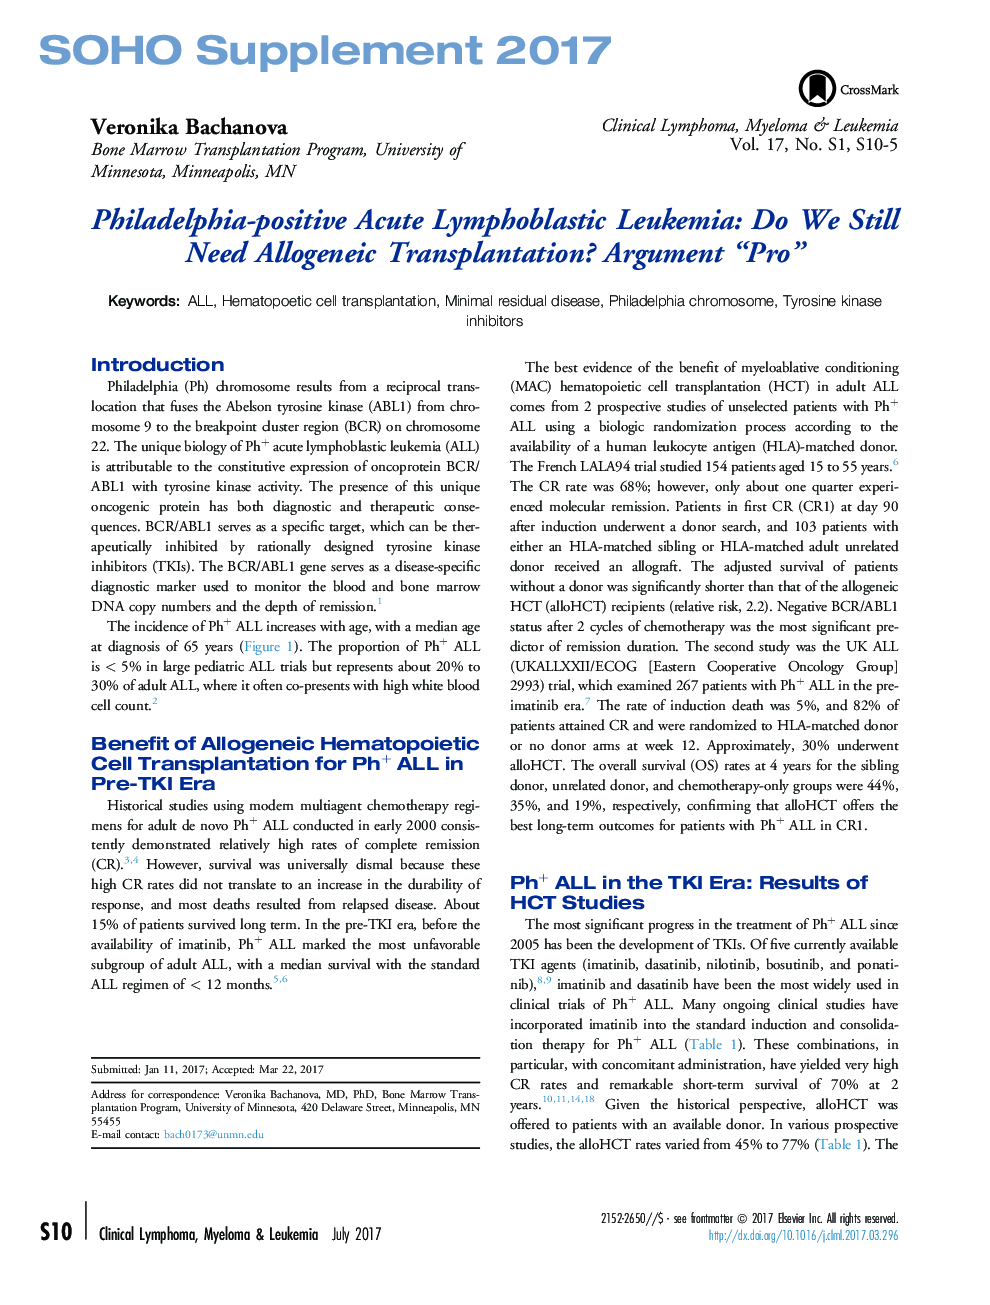 Philadelphia-positive Acute Lymphoblastic Leukemia: Do We Still Need Allogeneic Transplantation? Argument “Pro”